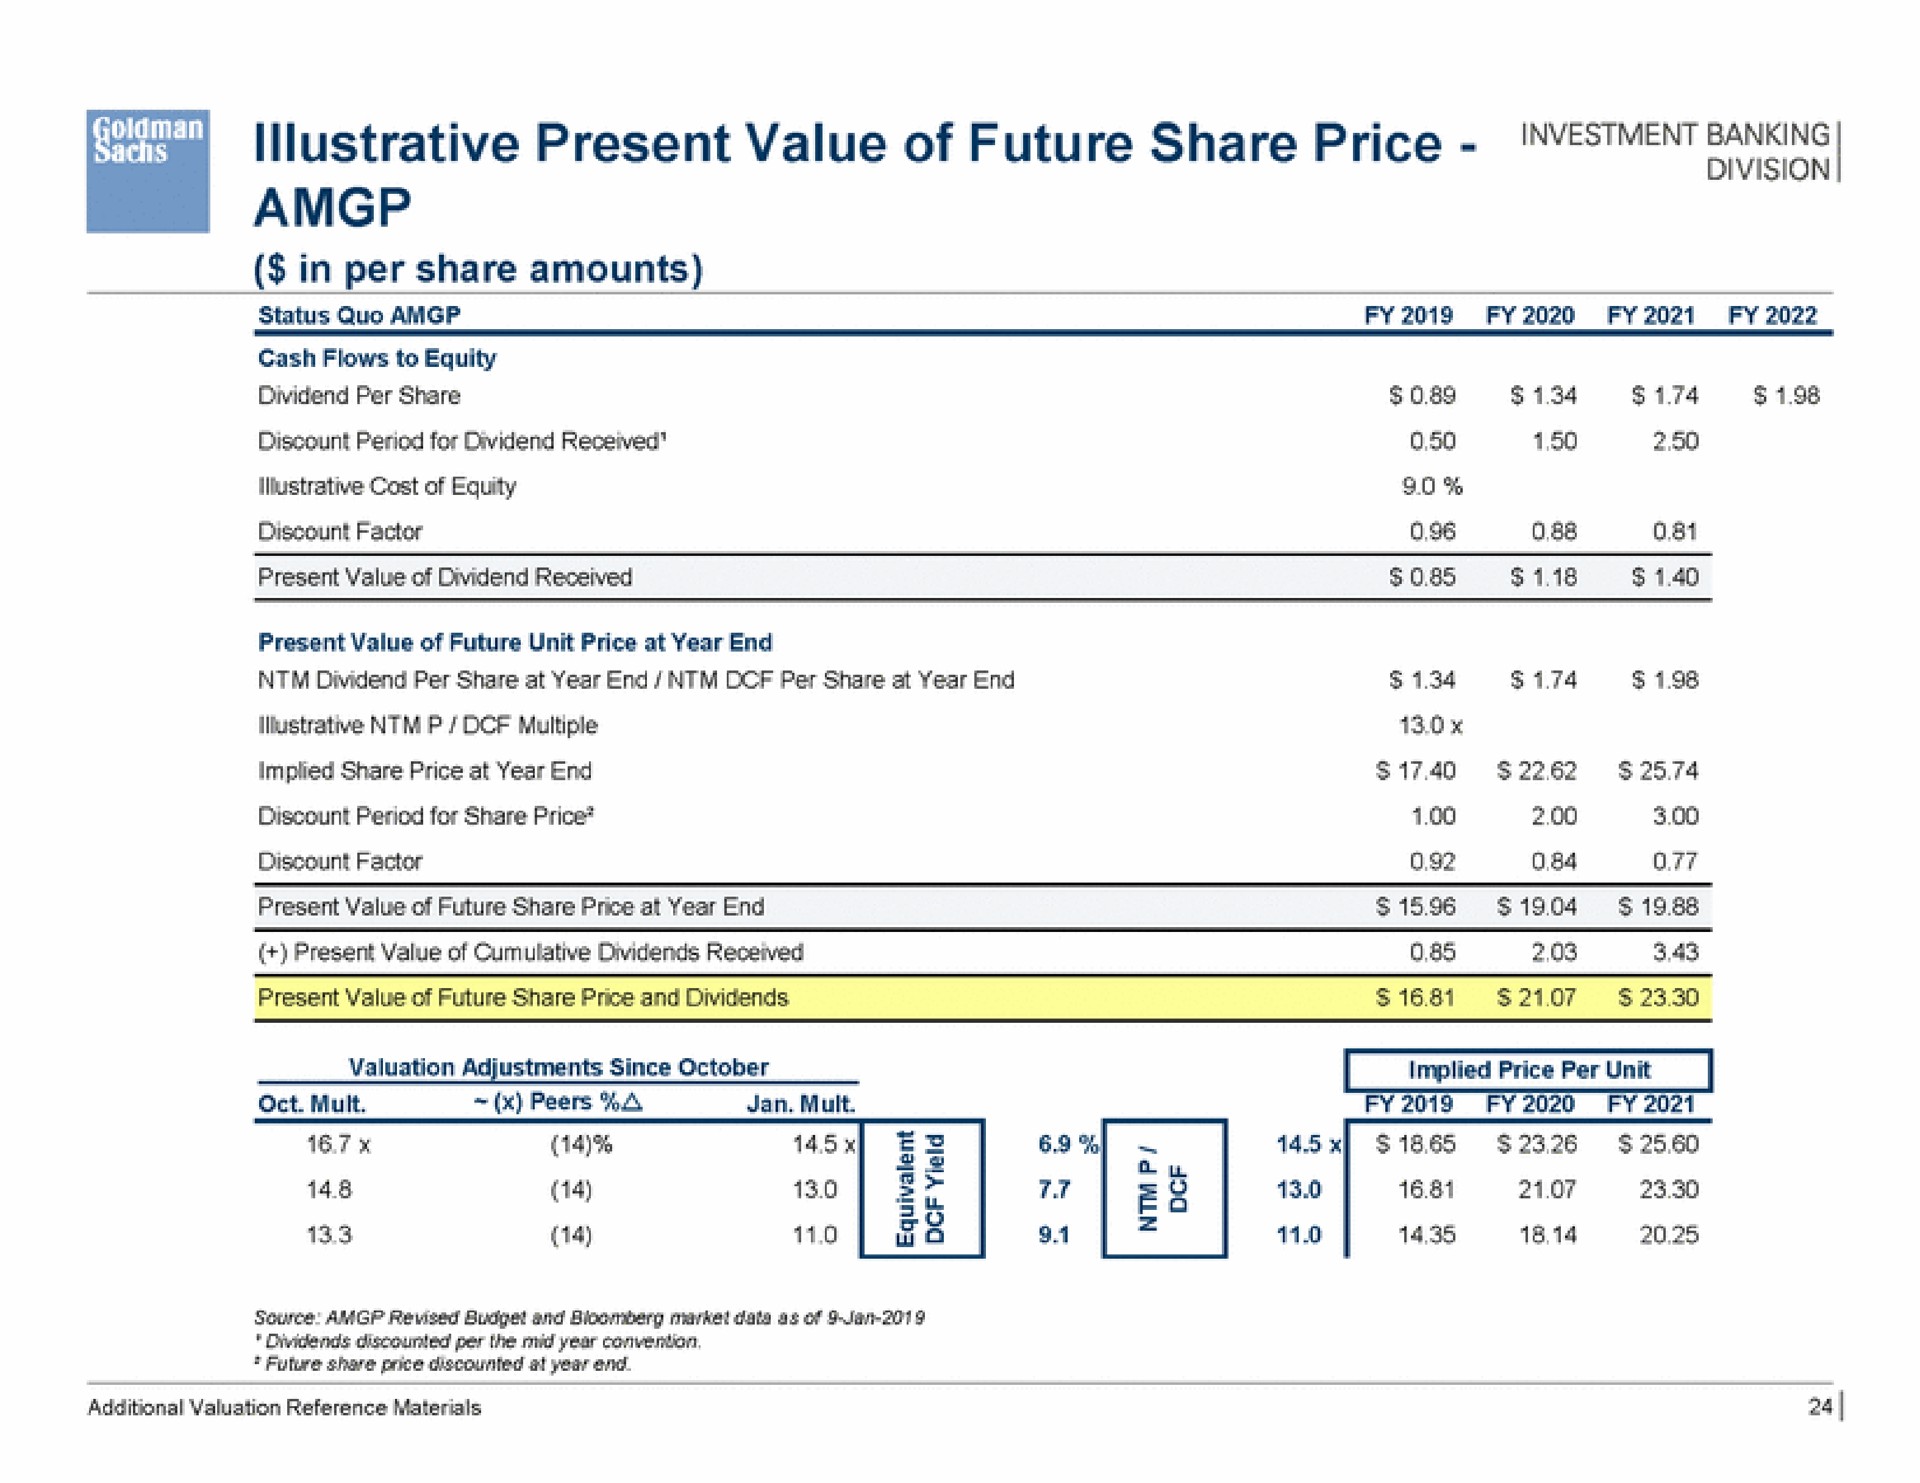 illustrative present value of future share price | Goldman Sachs